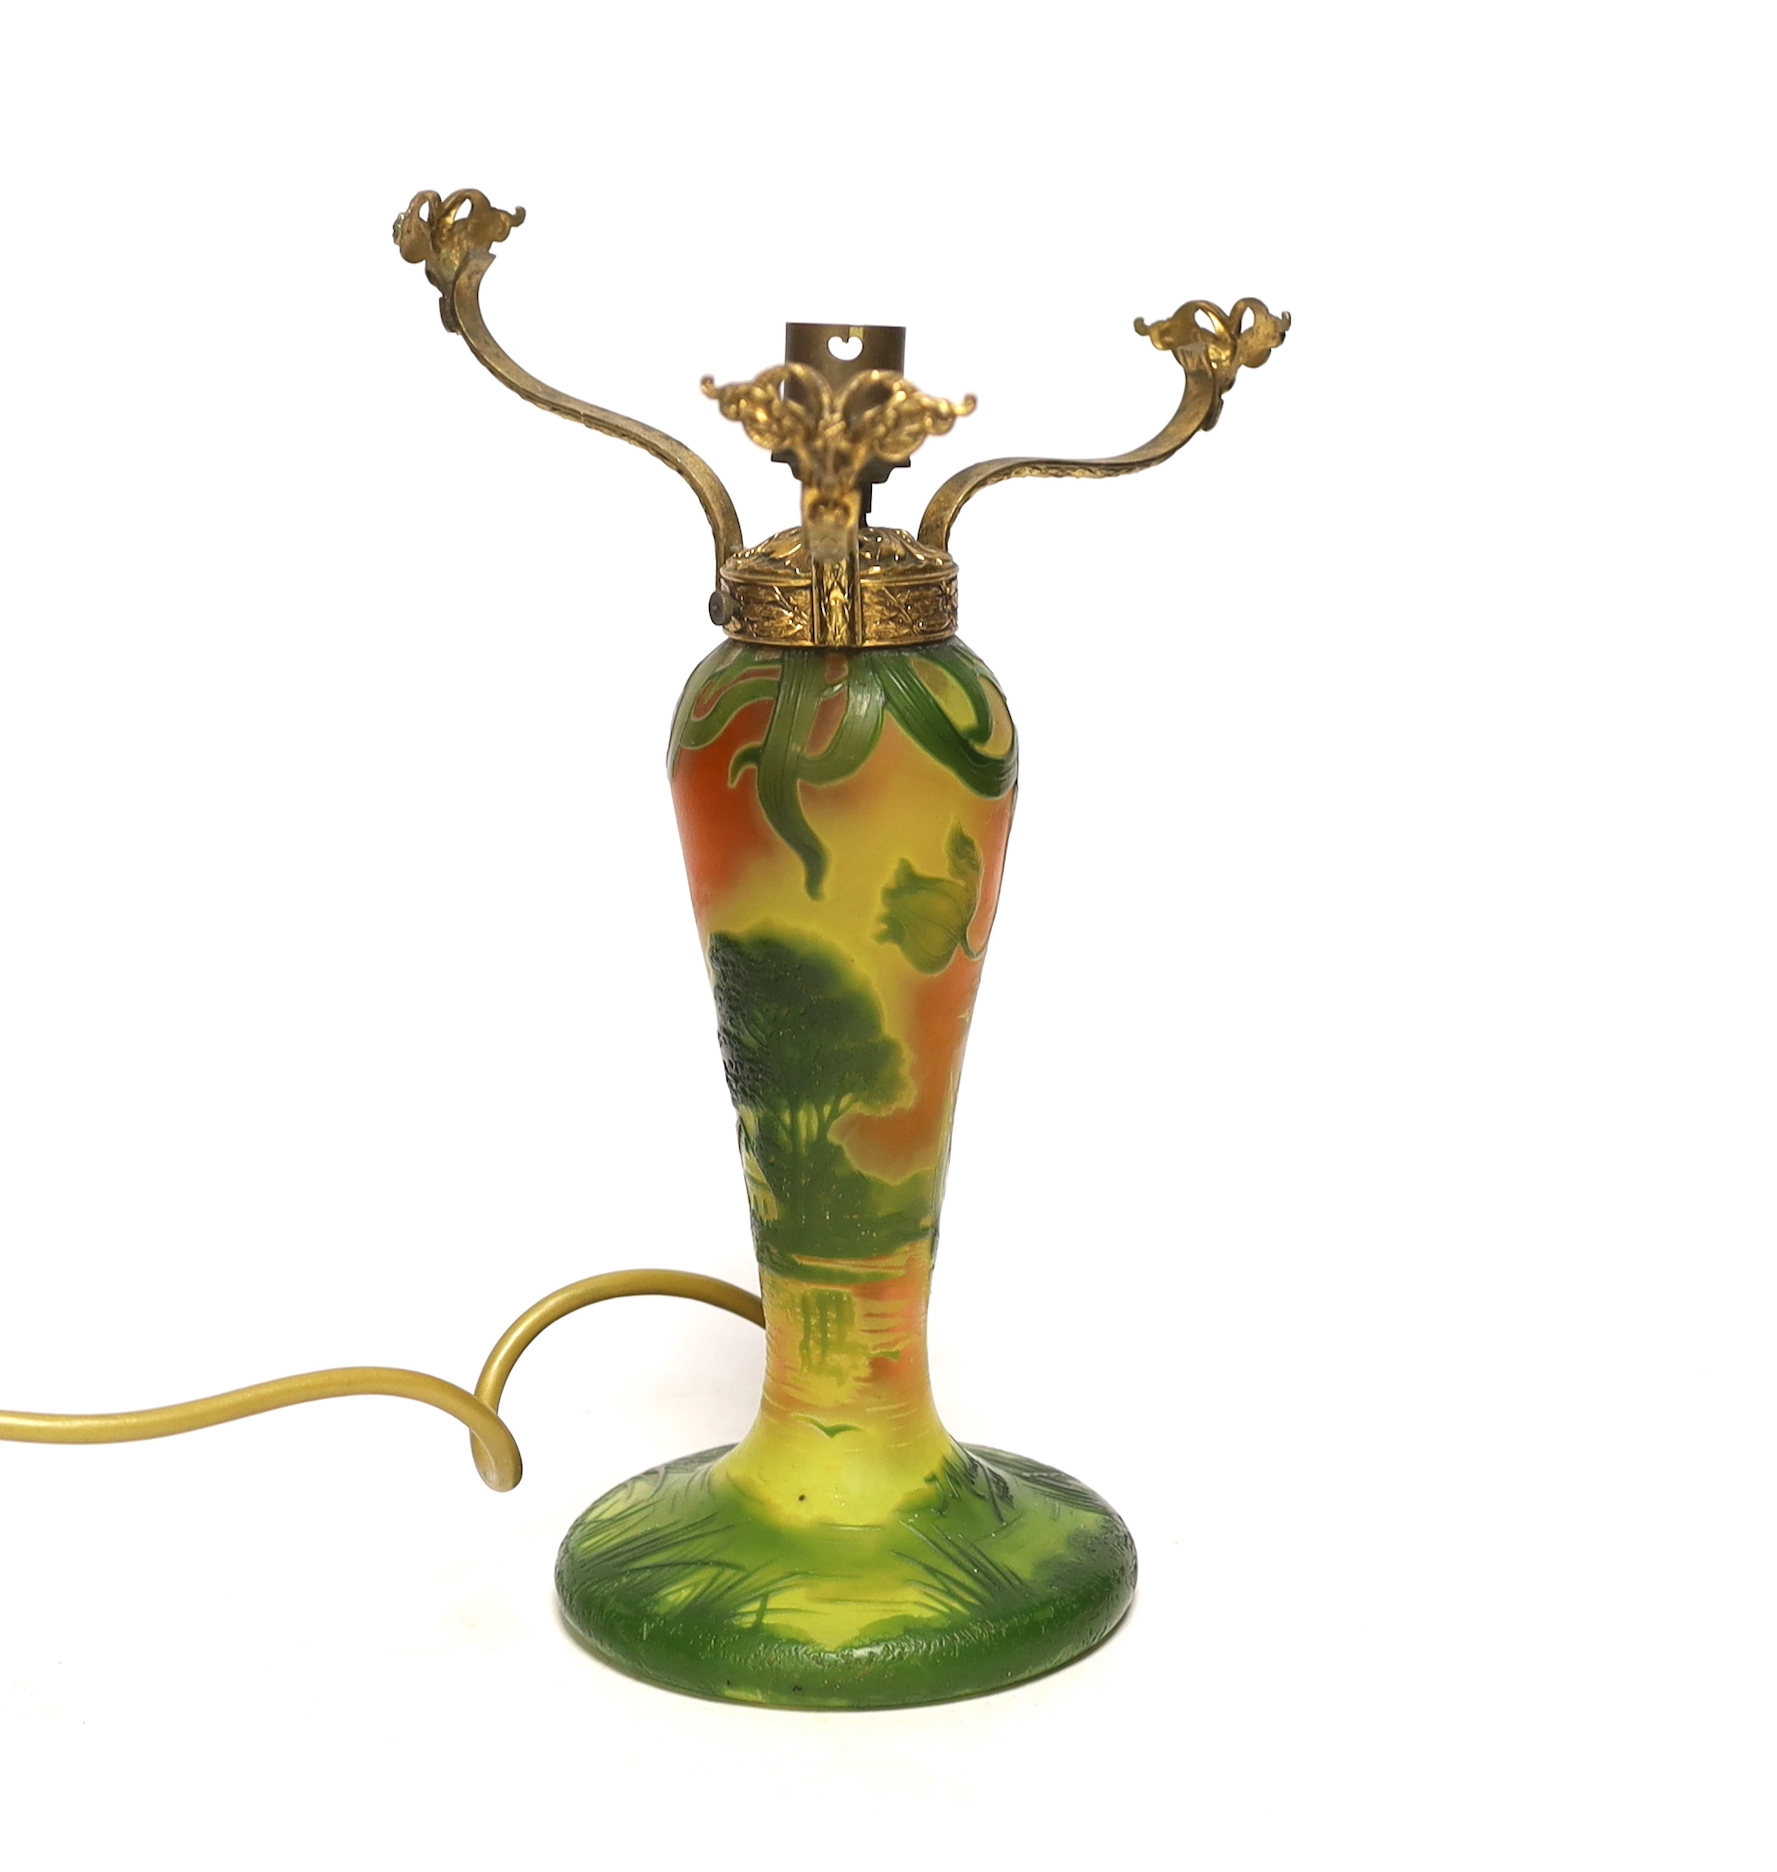 An Art Nouveau cameo glass lamp base by J. Michael, Paris, gilt metal mounted, 27cm high including fittings